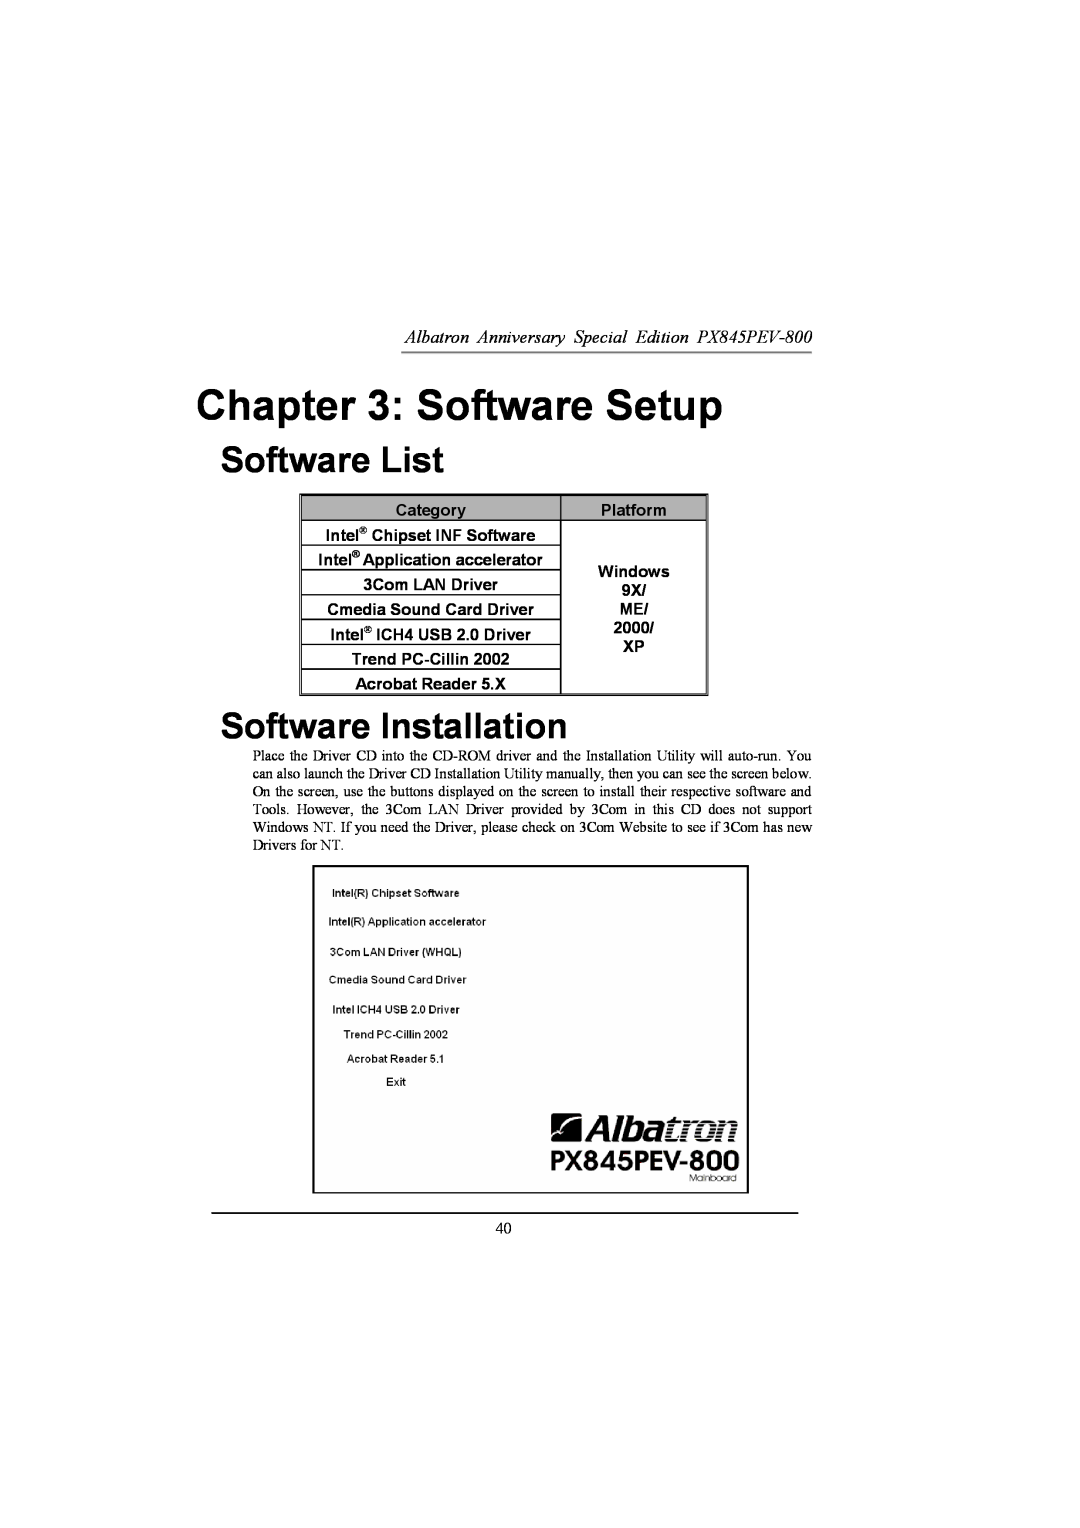 Albatron Technology PX845PEV-800 manual Software Setup, Software List, Software Installation 